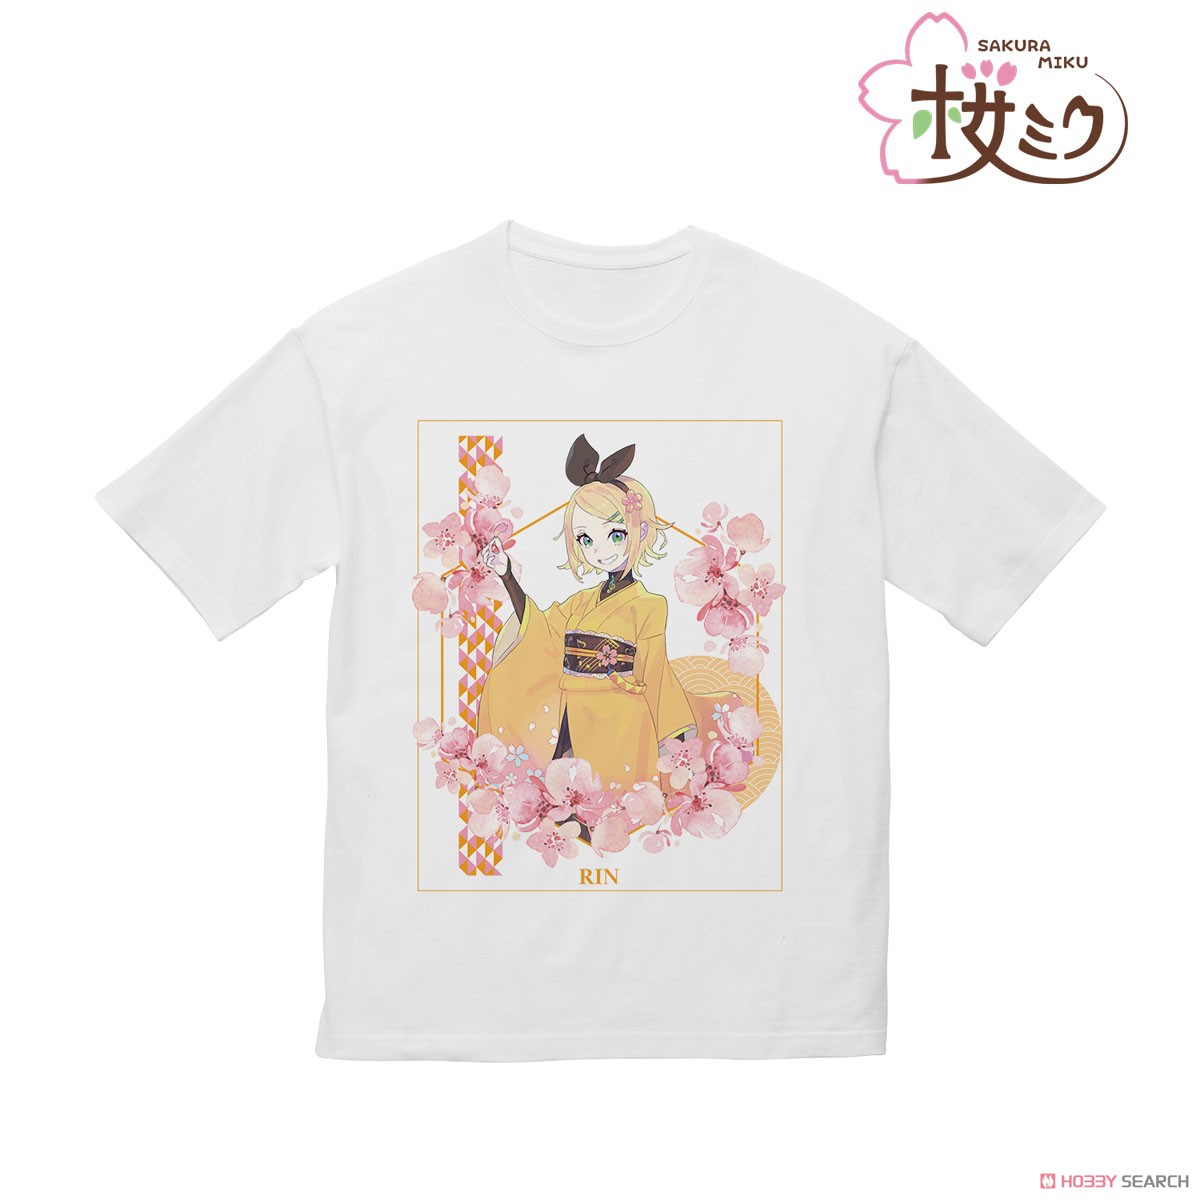 Sakura Miku [Especially Illustrated] Kagamine Rin Art by Kuro Big Silhouette T-Shirt Unisex M (Anime Toy) Item picture1